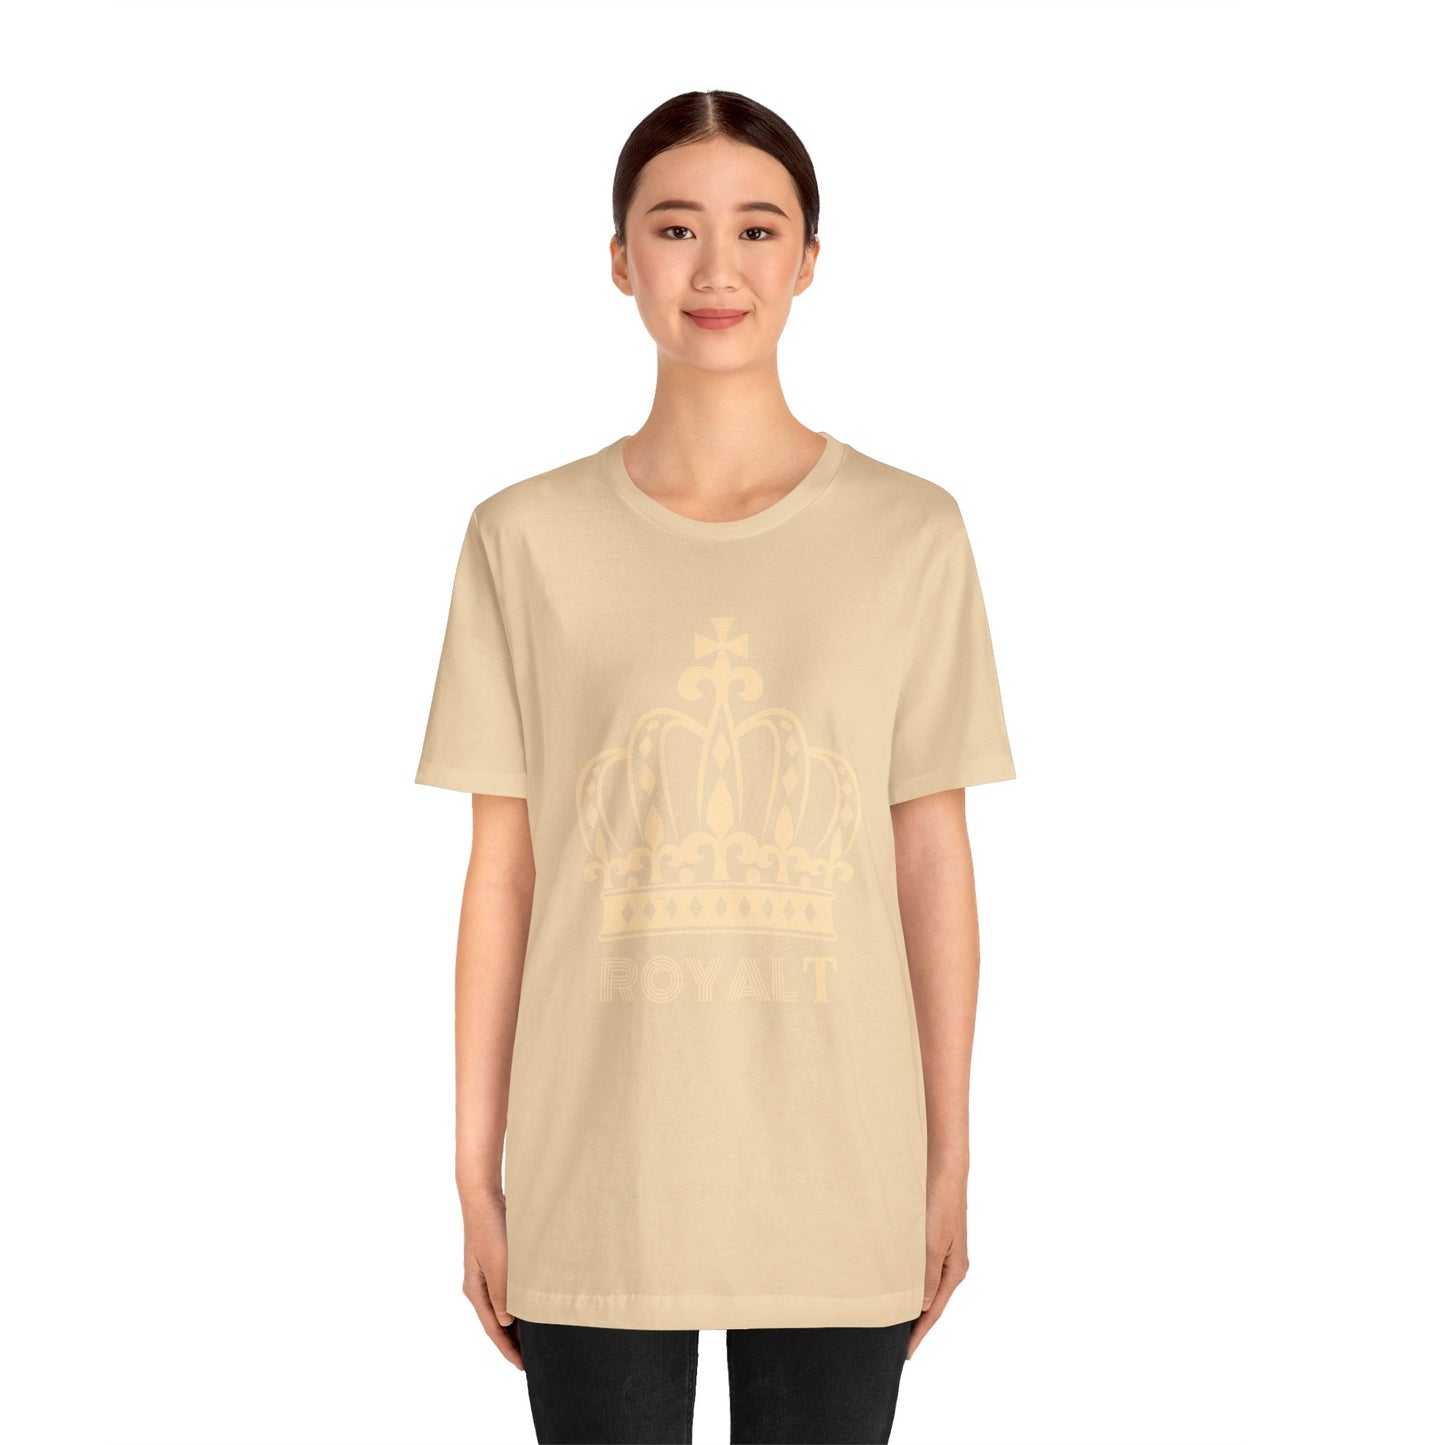 Soft Cream - Unisex Jersey Short Sleeve T Shirt - Cream Royal T